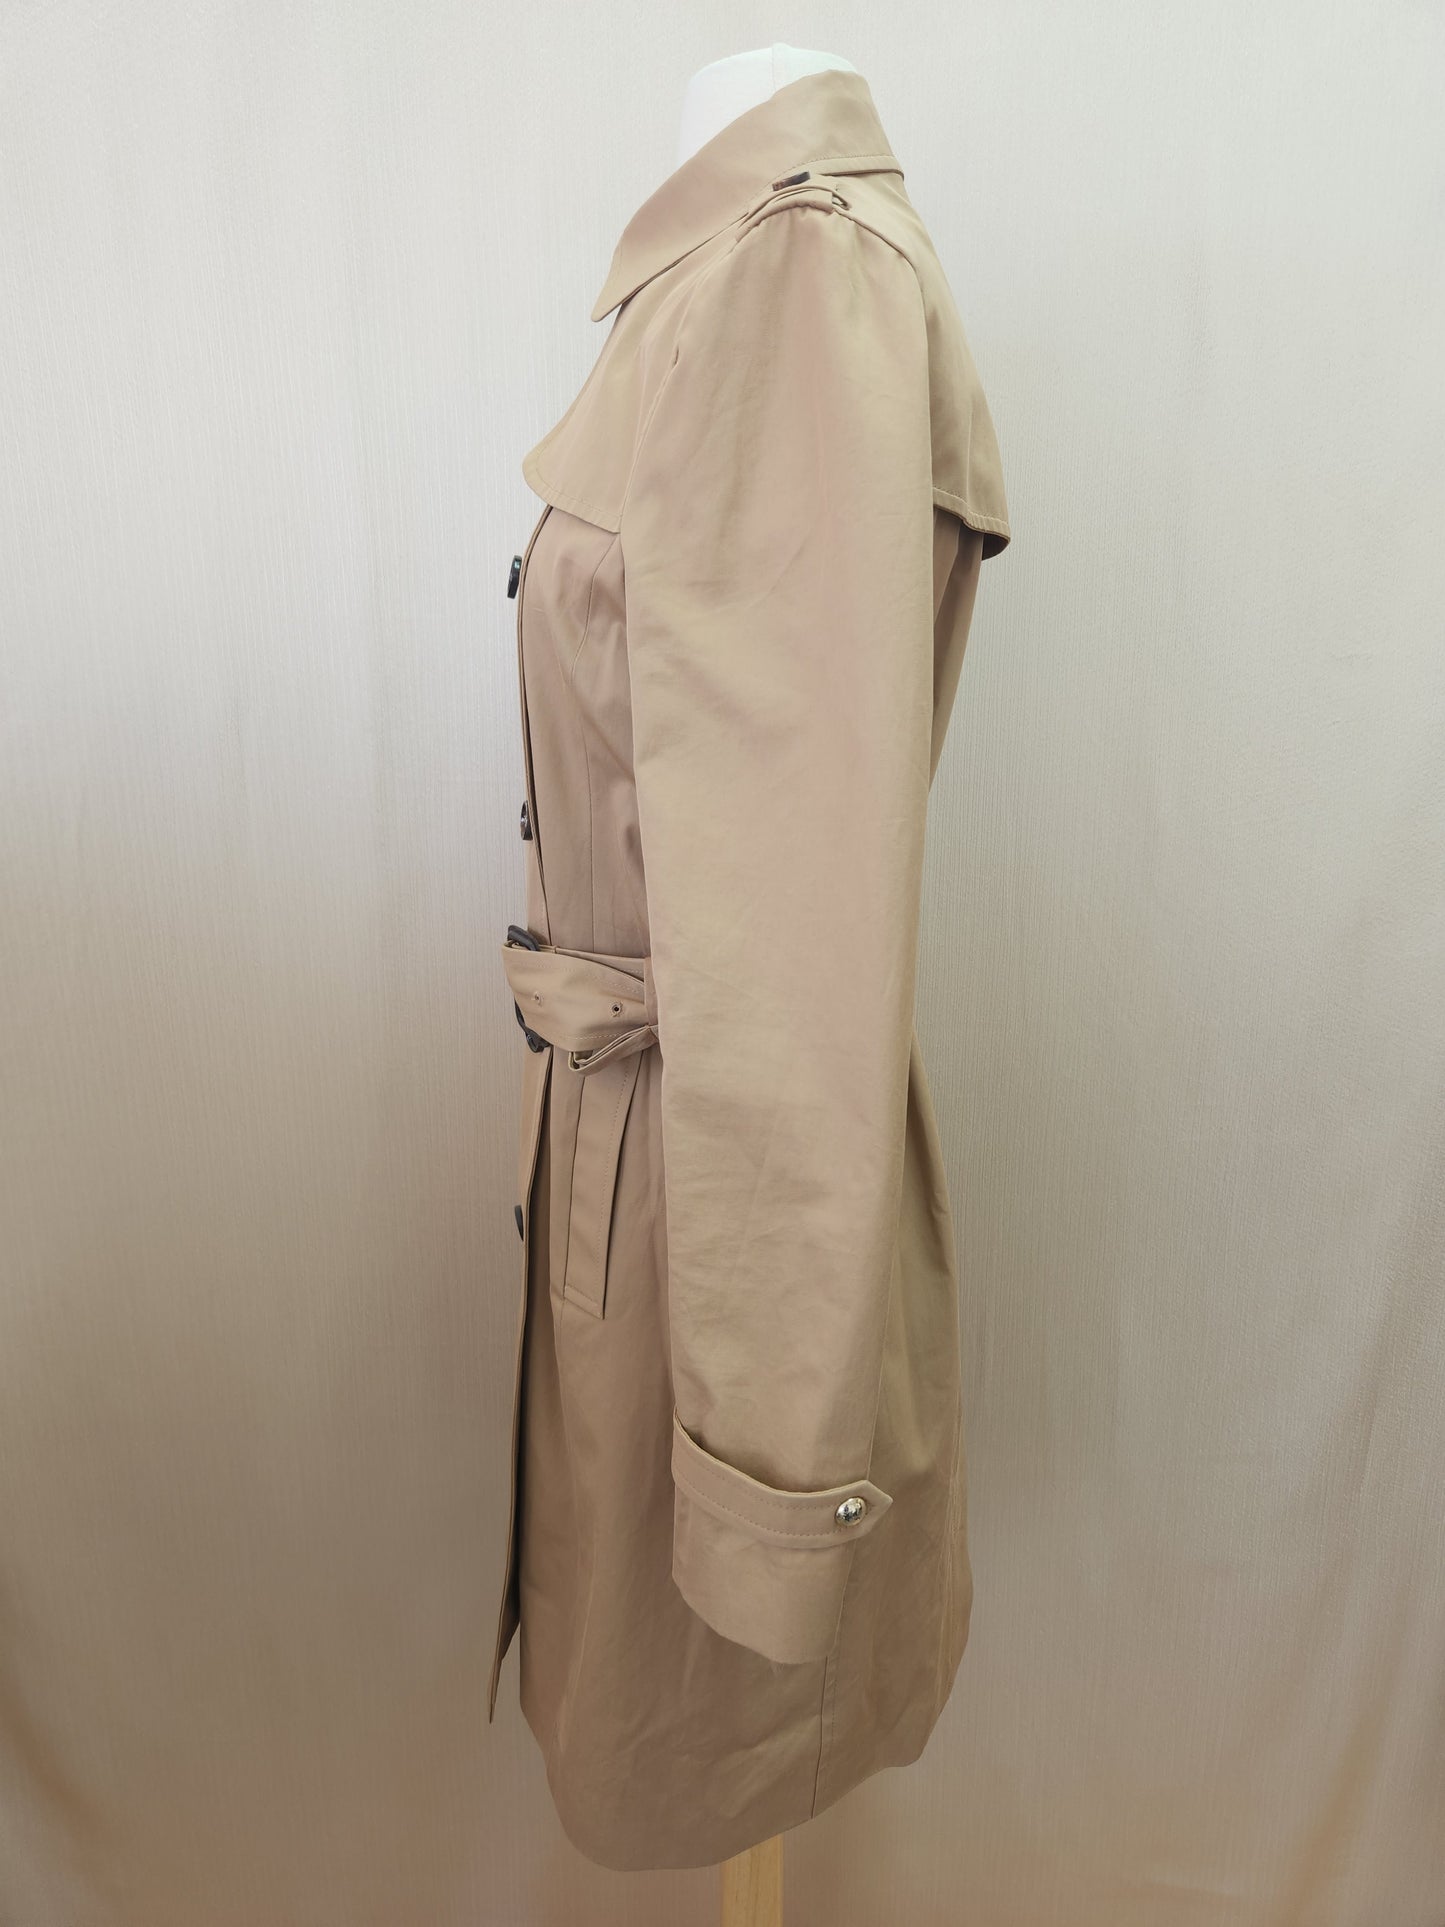 Massimo Dutti Women's Tan Midi Trench Coat - Size: S